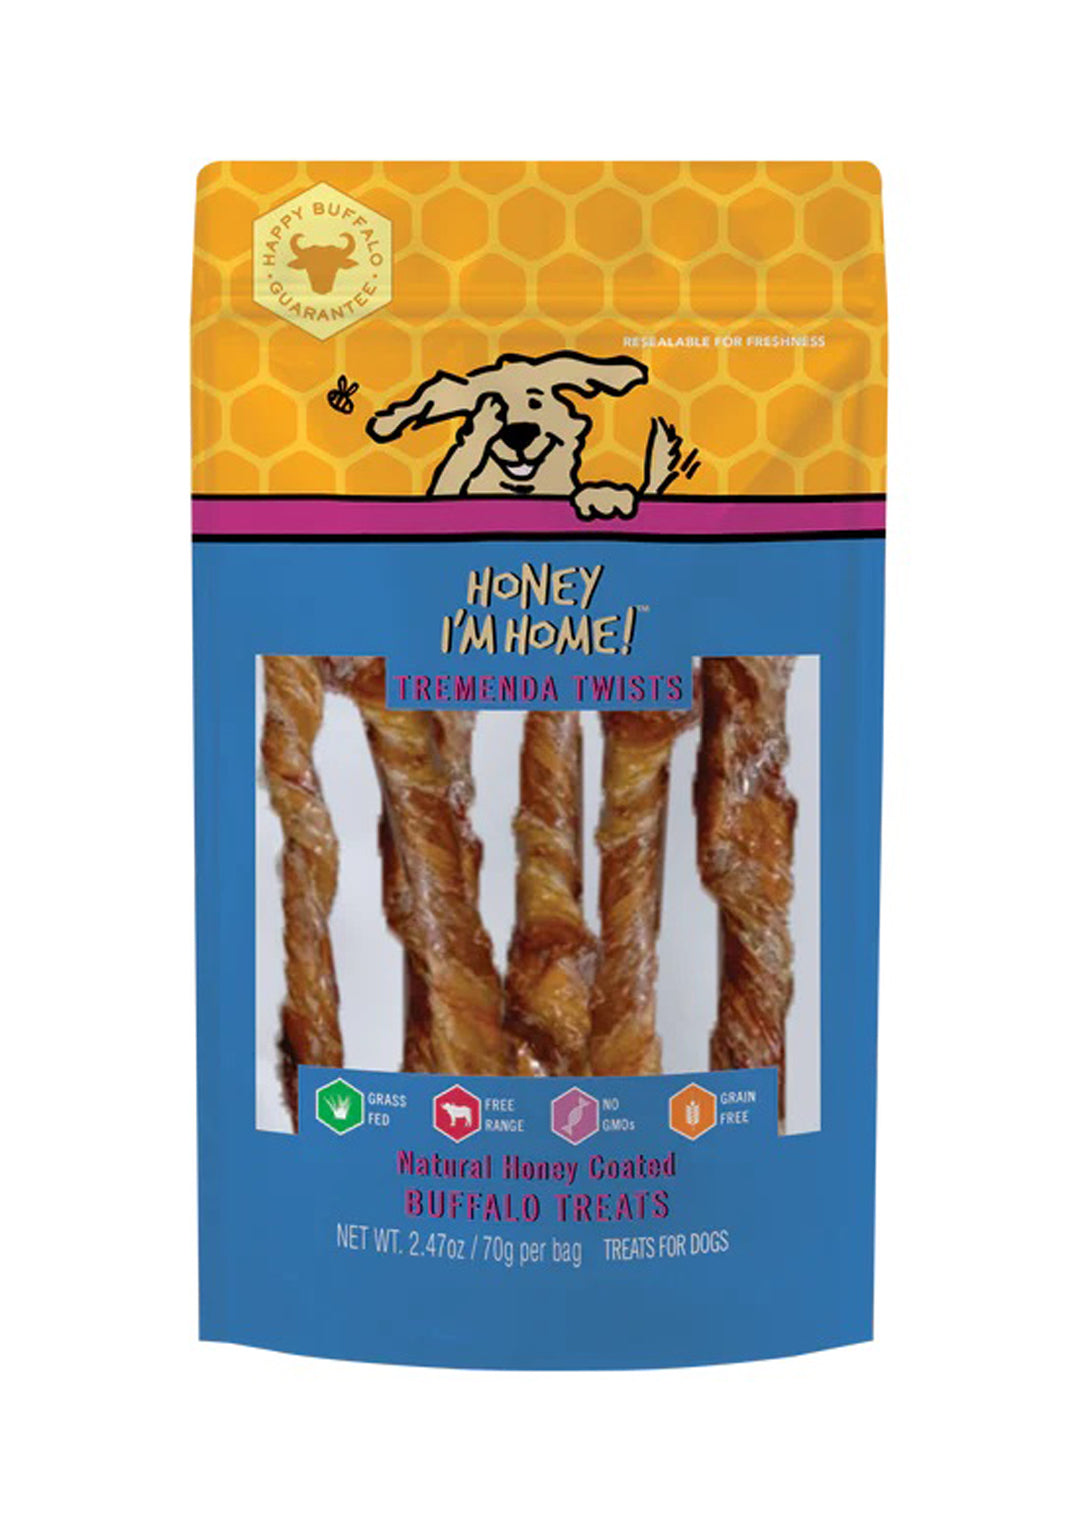 Honey IM Home Dog Natural Honey Coated Buffalo Treats Tremenda Twists 2.47Oz